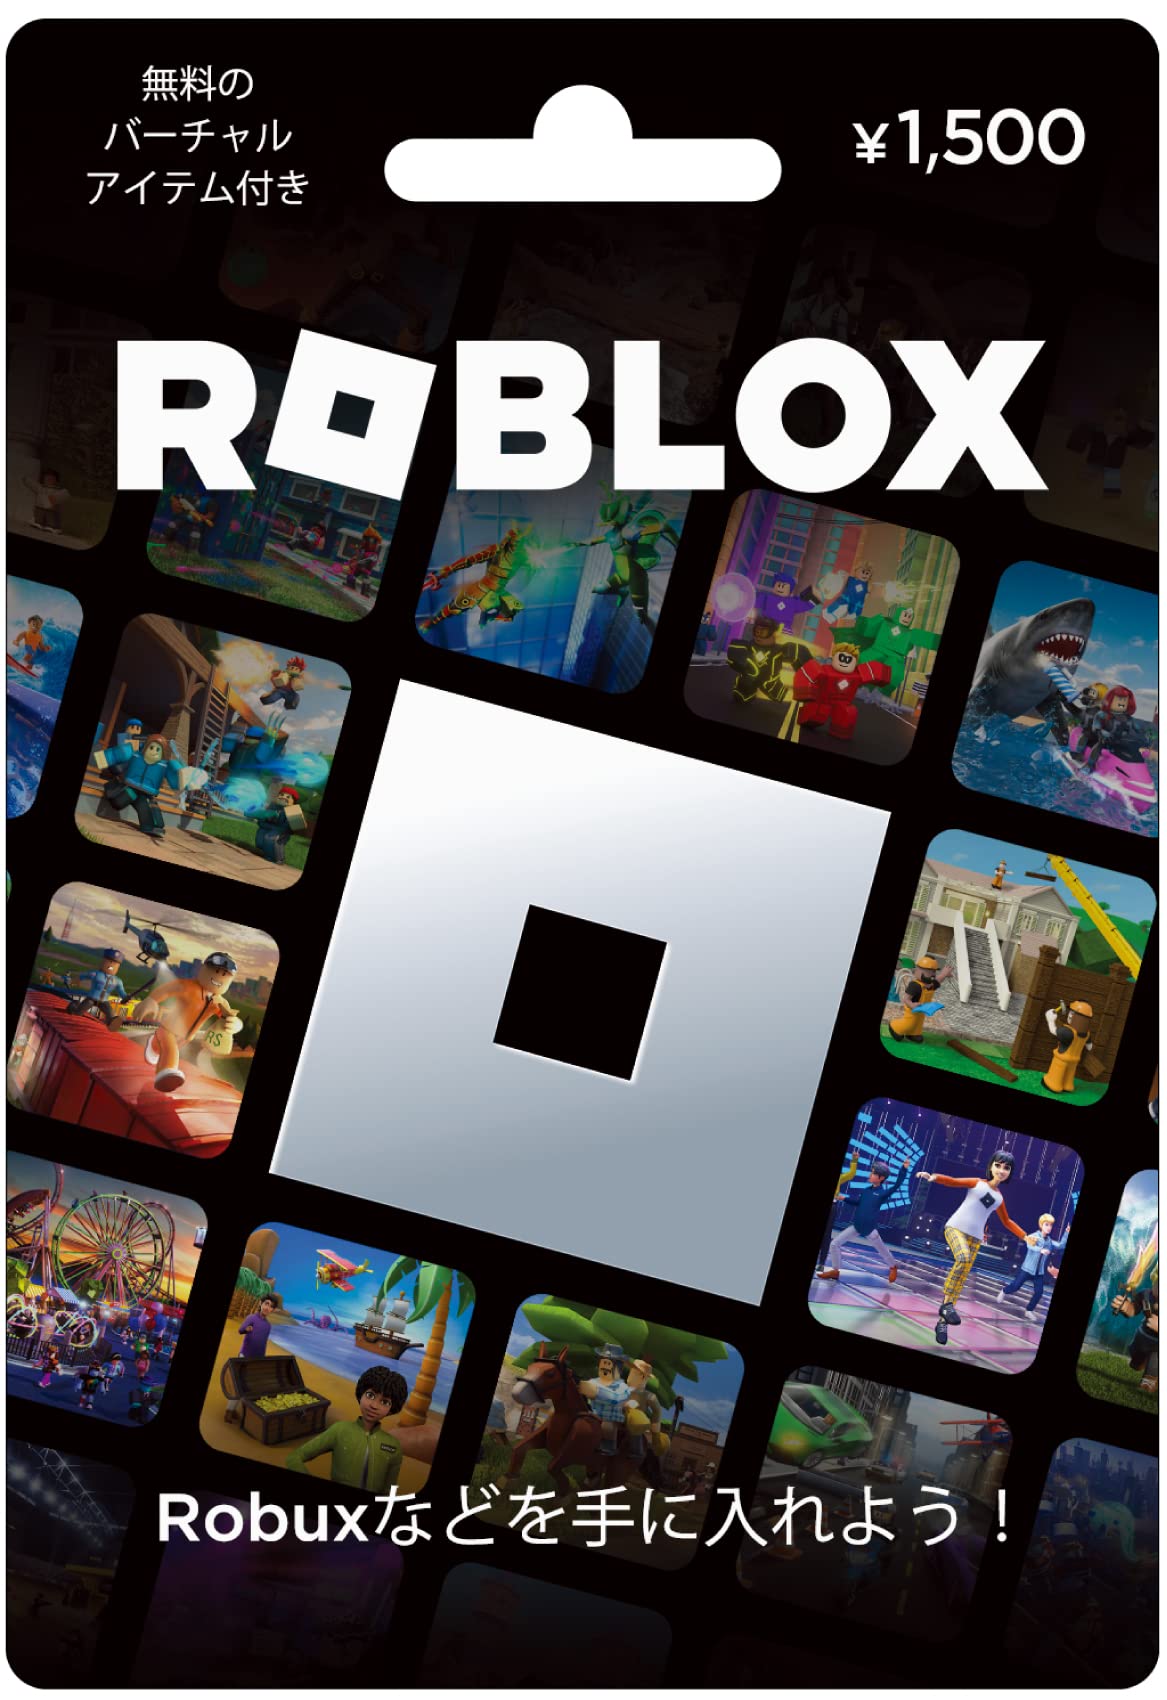 Robloxギフトカード - 1,500 Robux 【限定バーチャルアイテムを含む】 【オンラインゲームコード】 ロブロックス | カード版